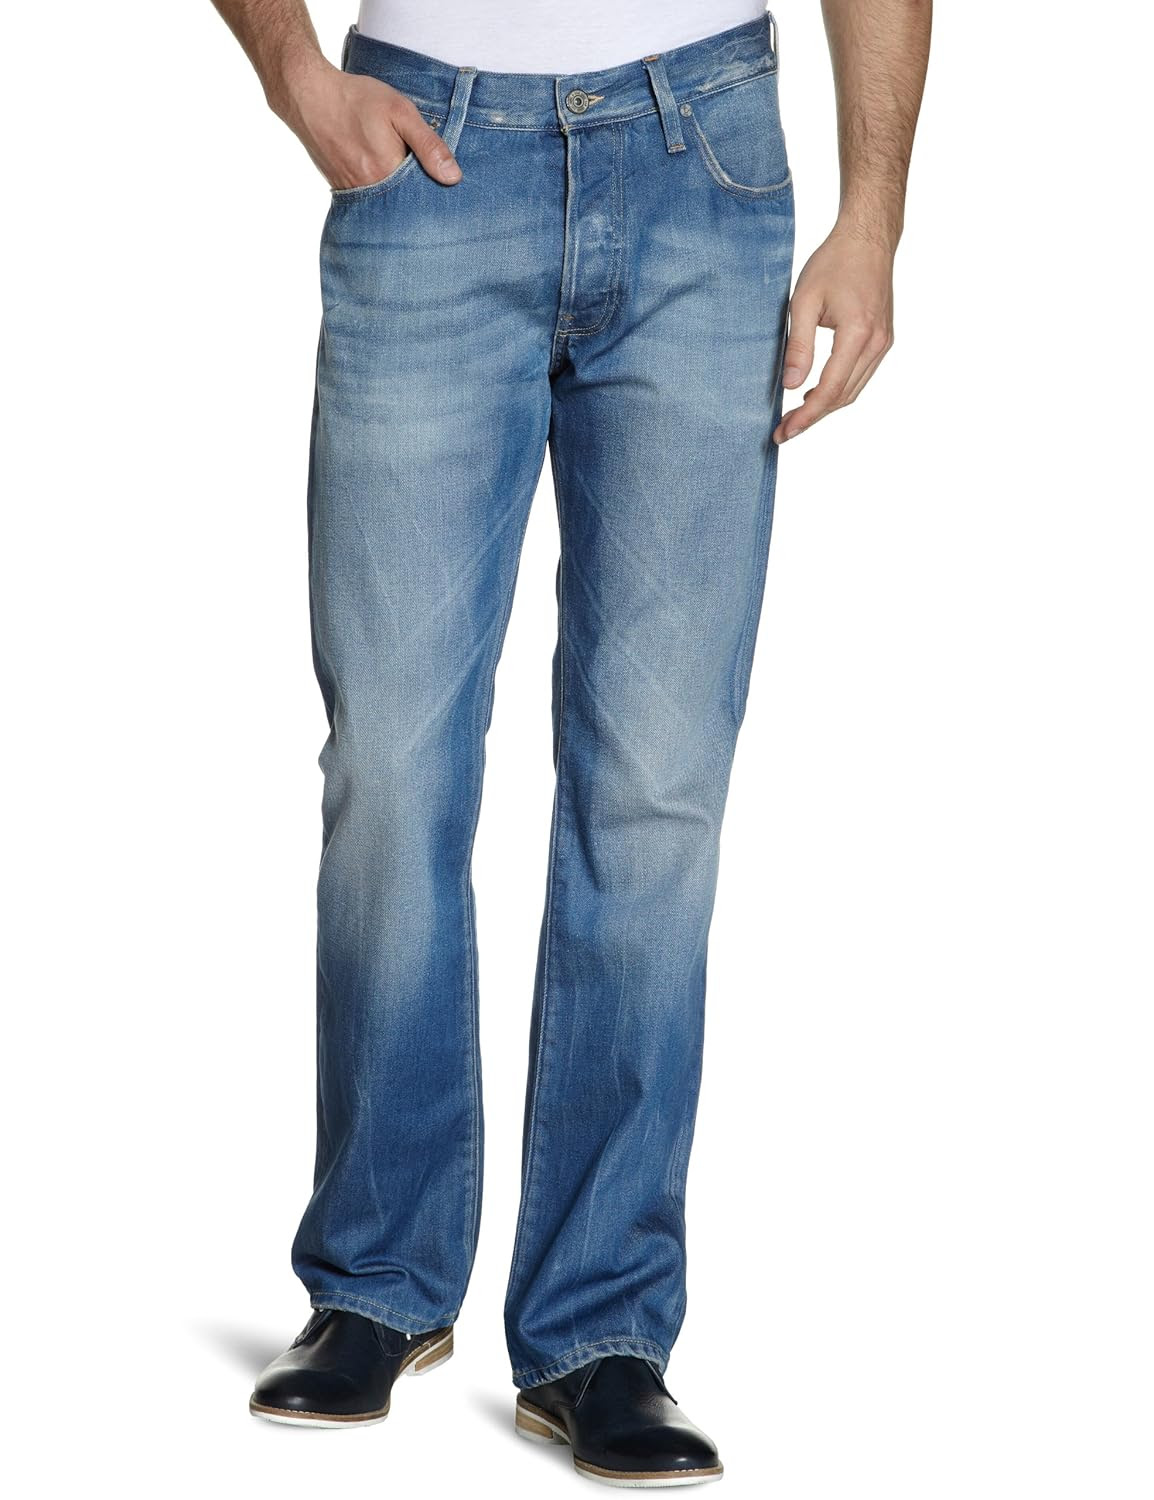 Cheap Men's Trousers & Jeans - Wholesale: The Fashion Jean Genie